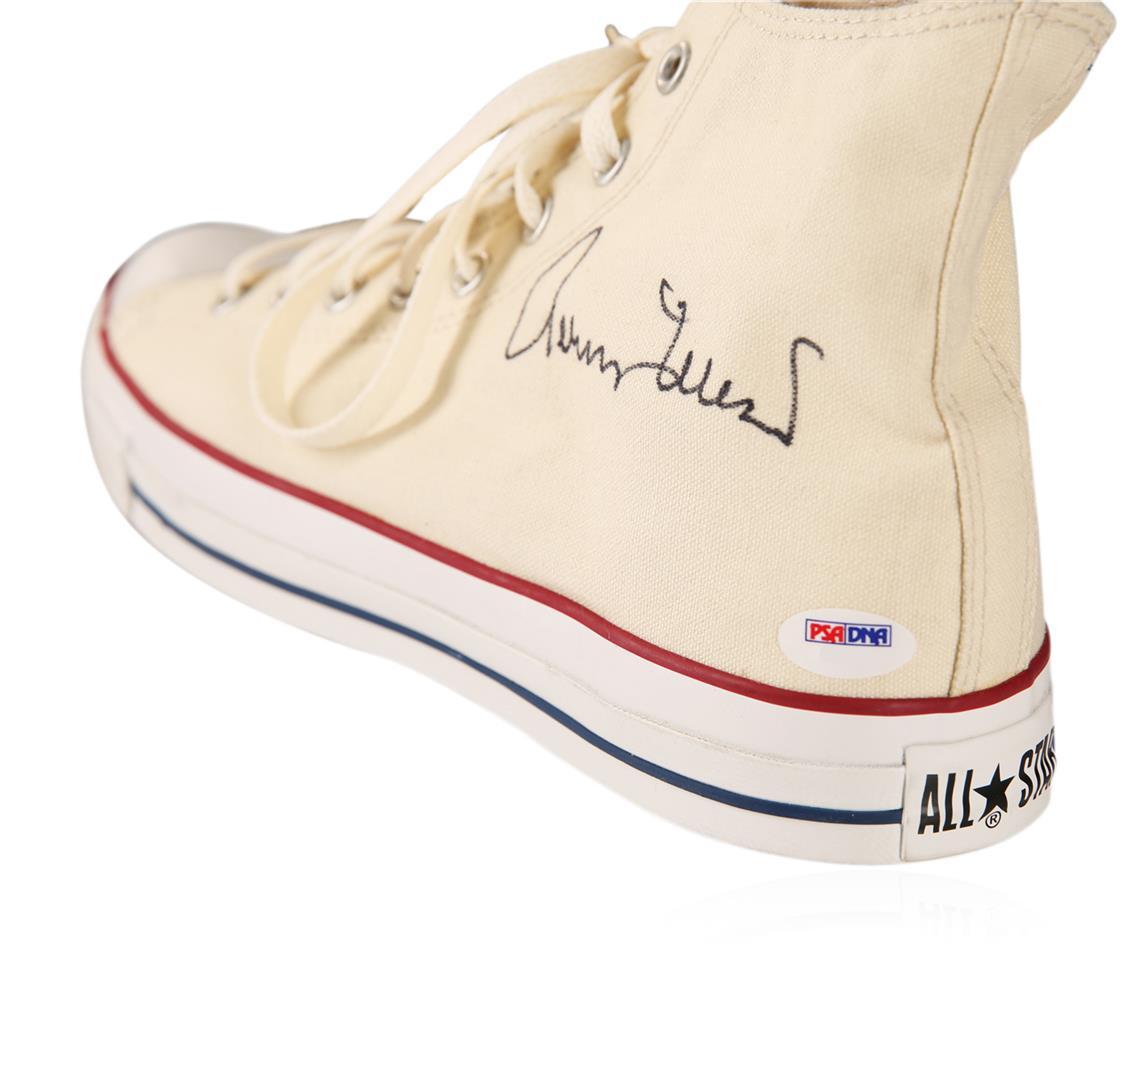 PSA Certified Jerry West Autographed Shoe